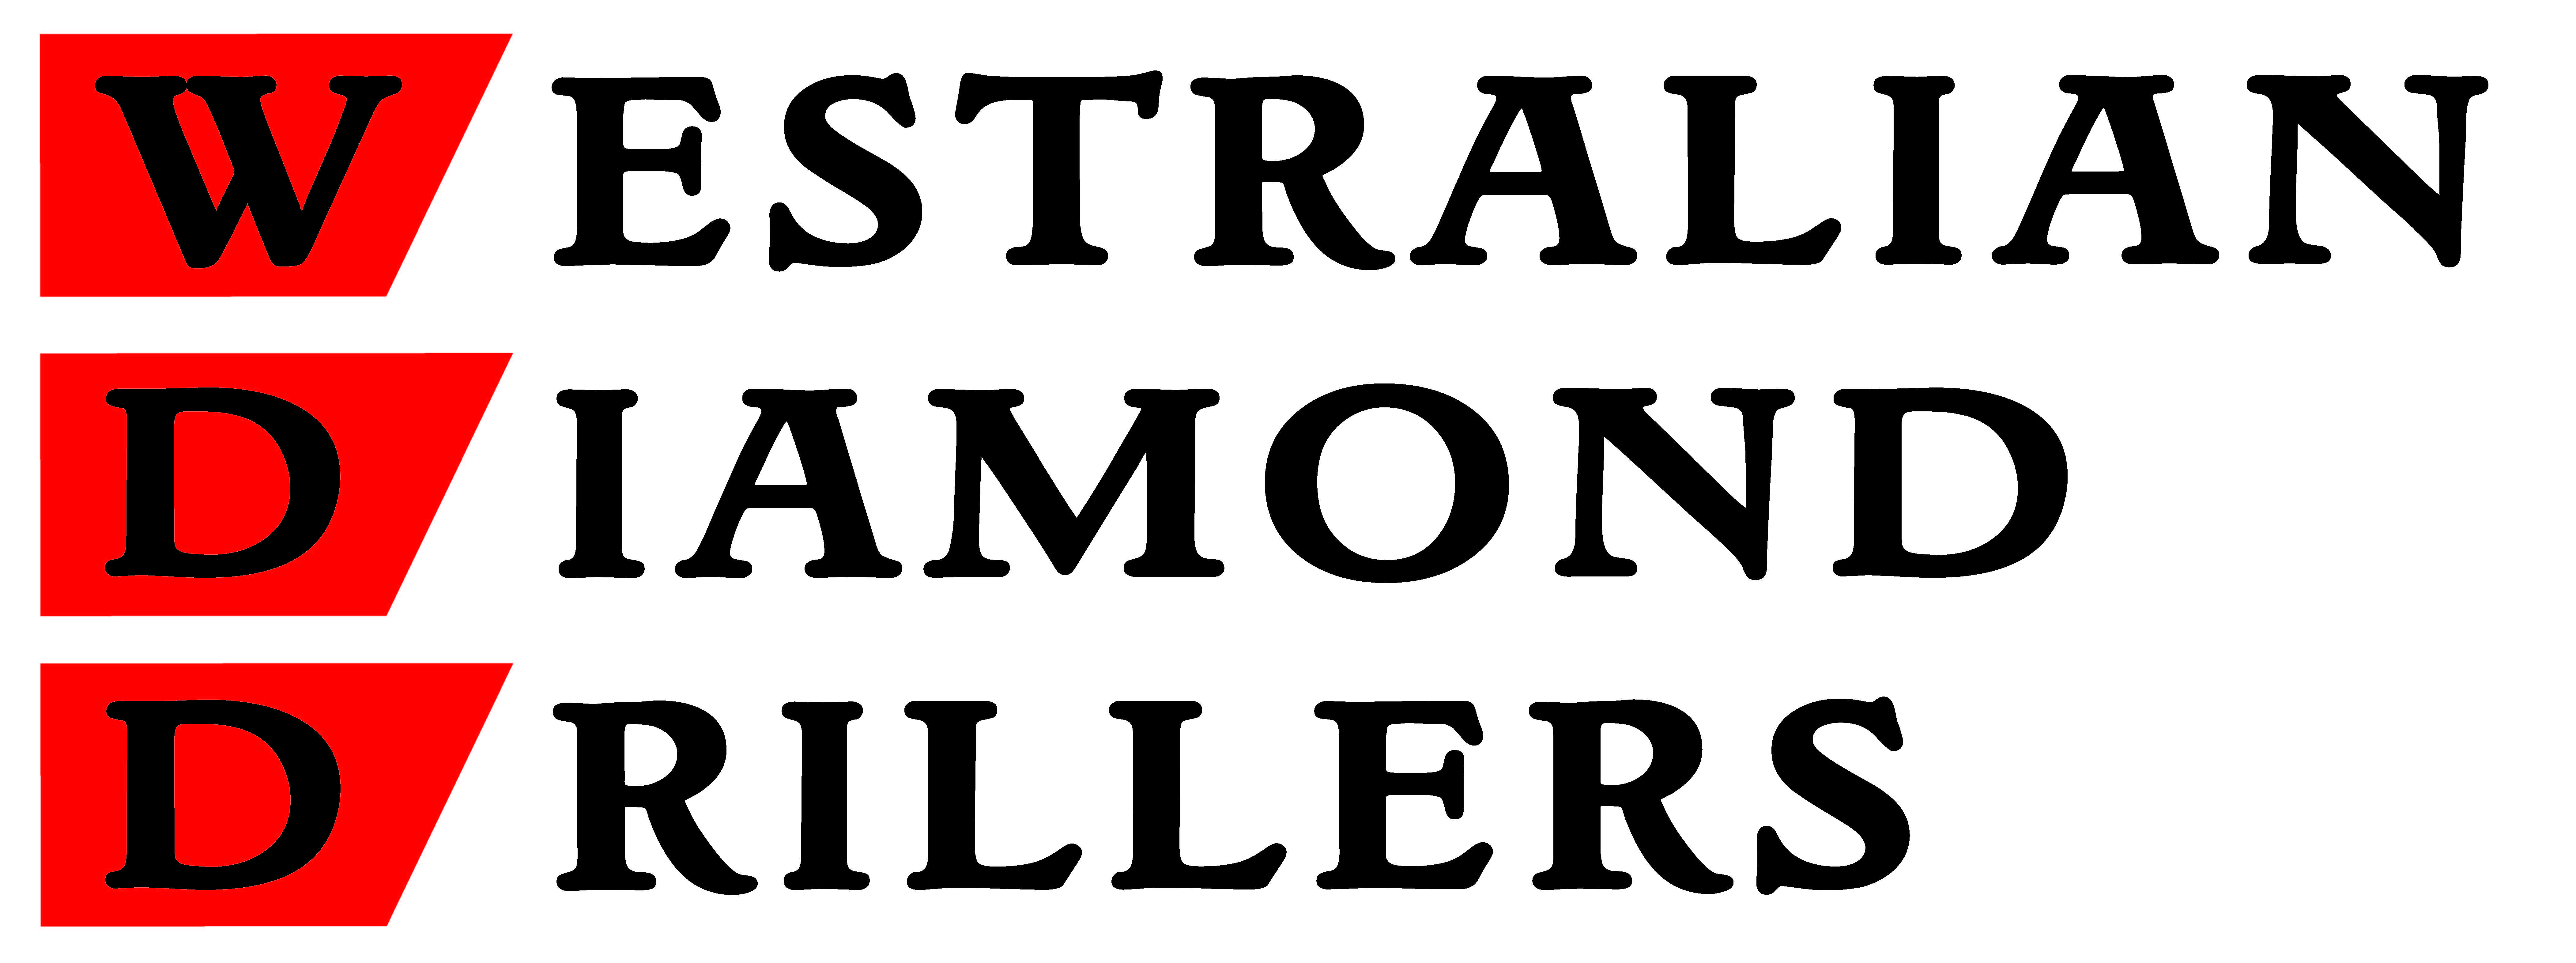 Westralian Diamond Drillers